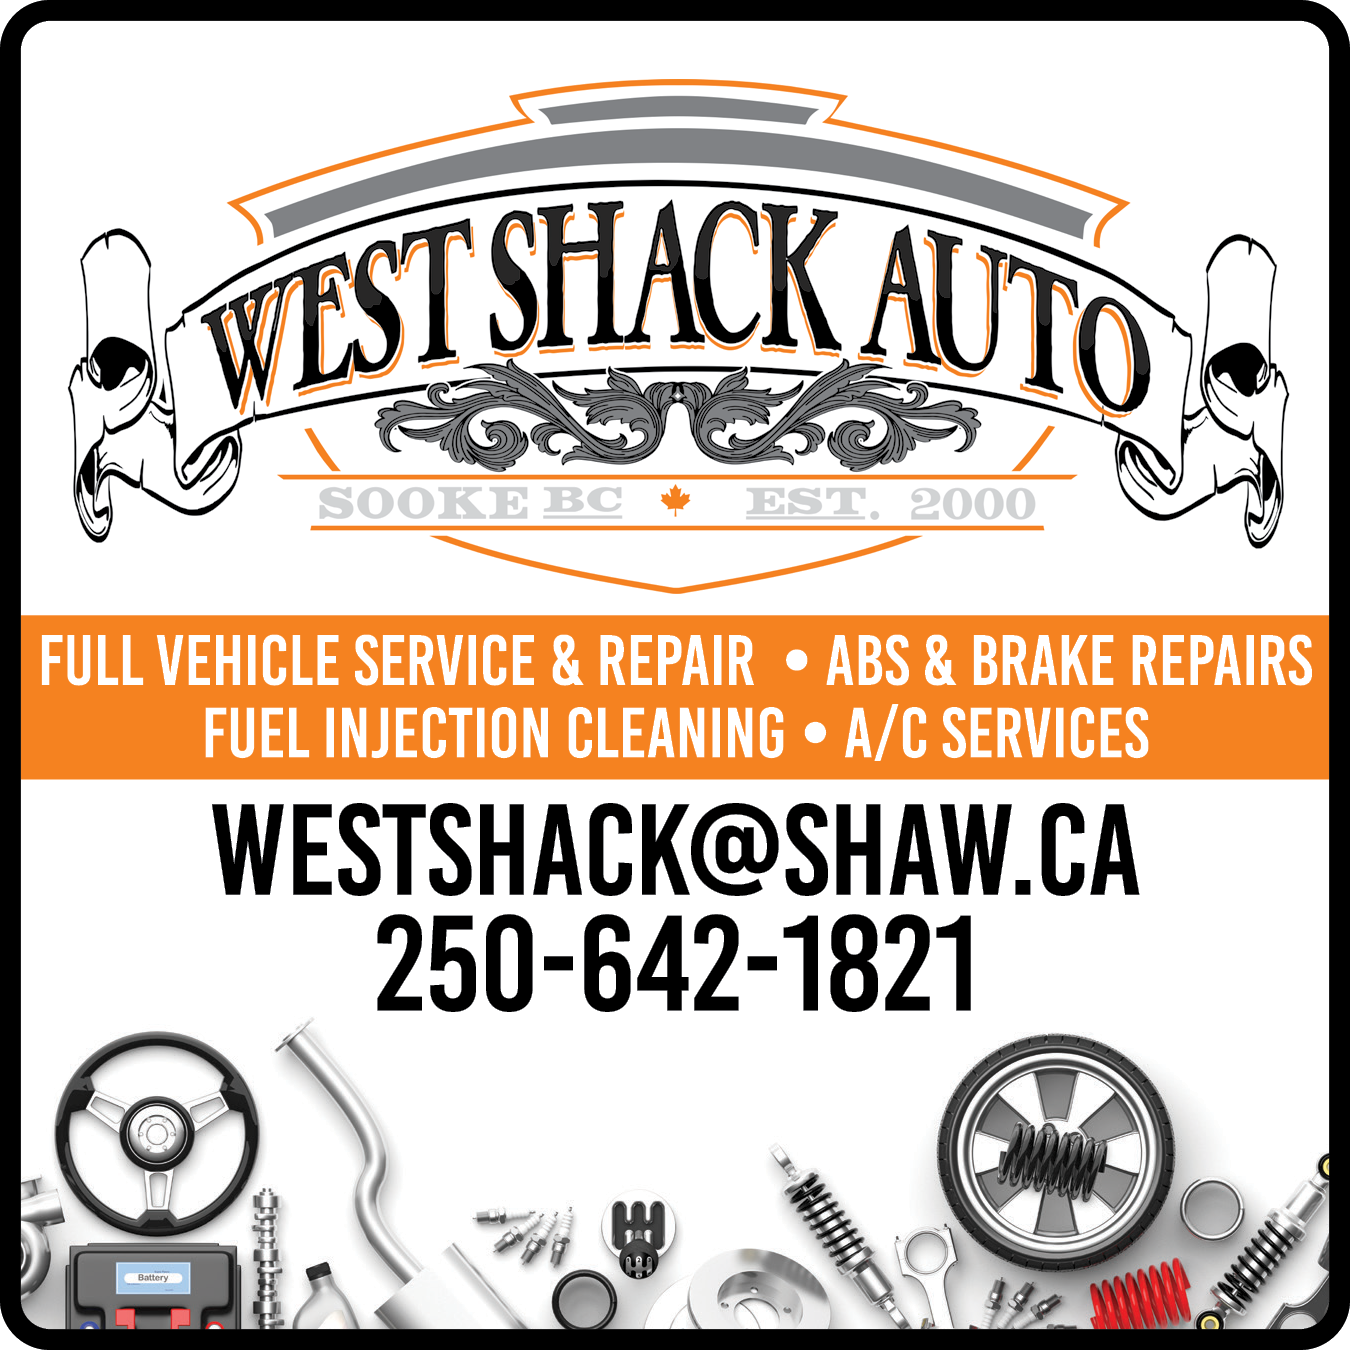 West Shack Auto Service